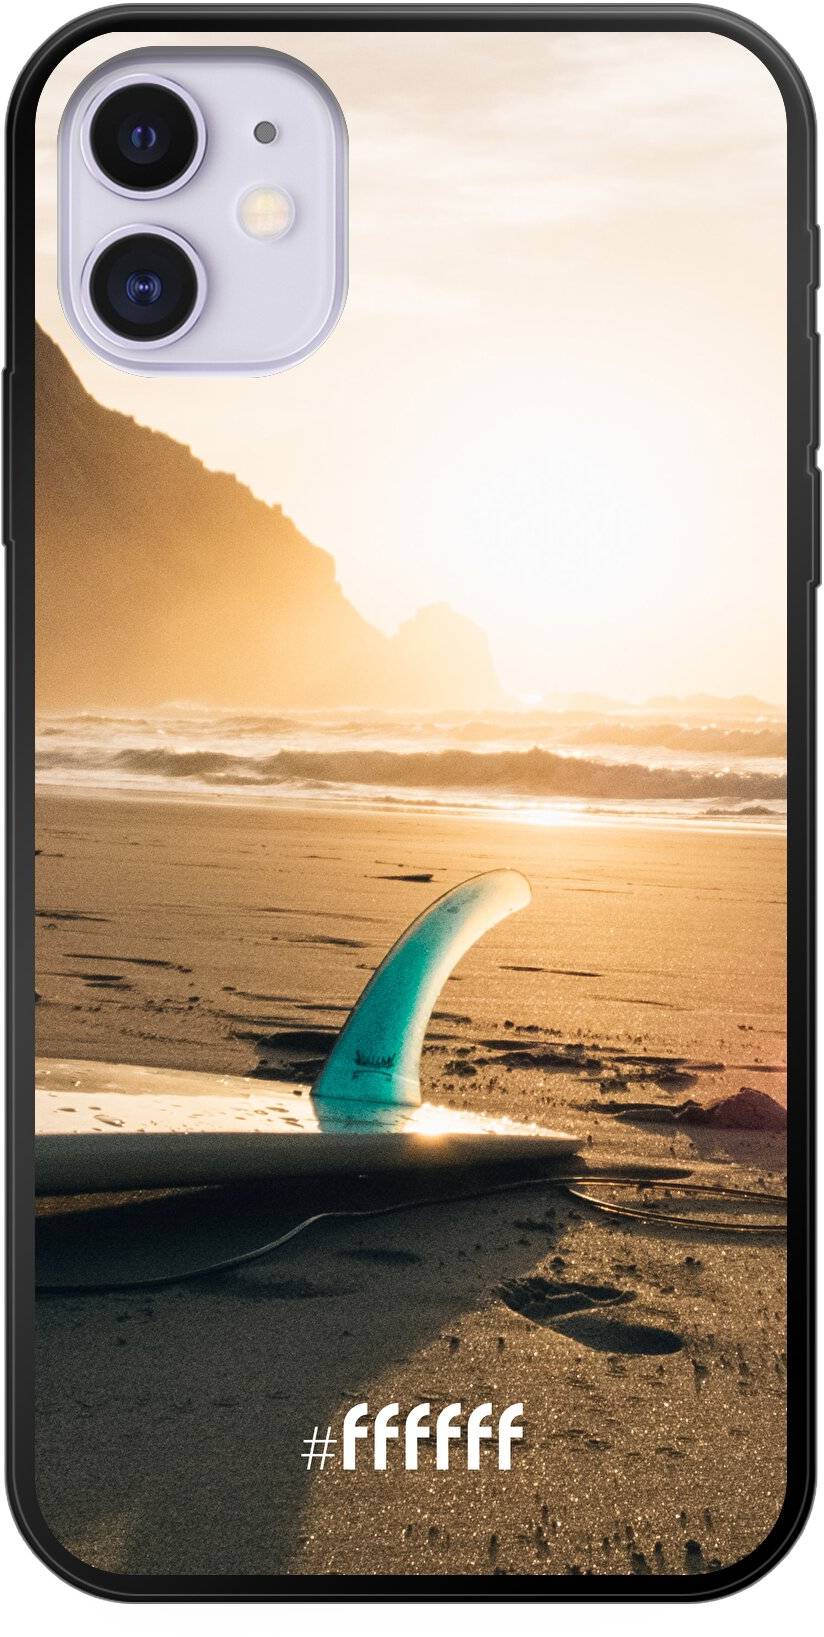 Sunset Surf iPhone 11